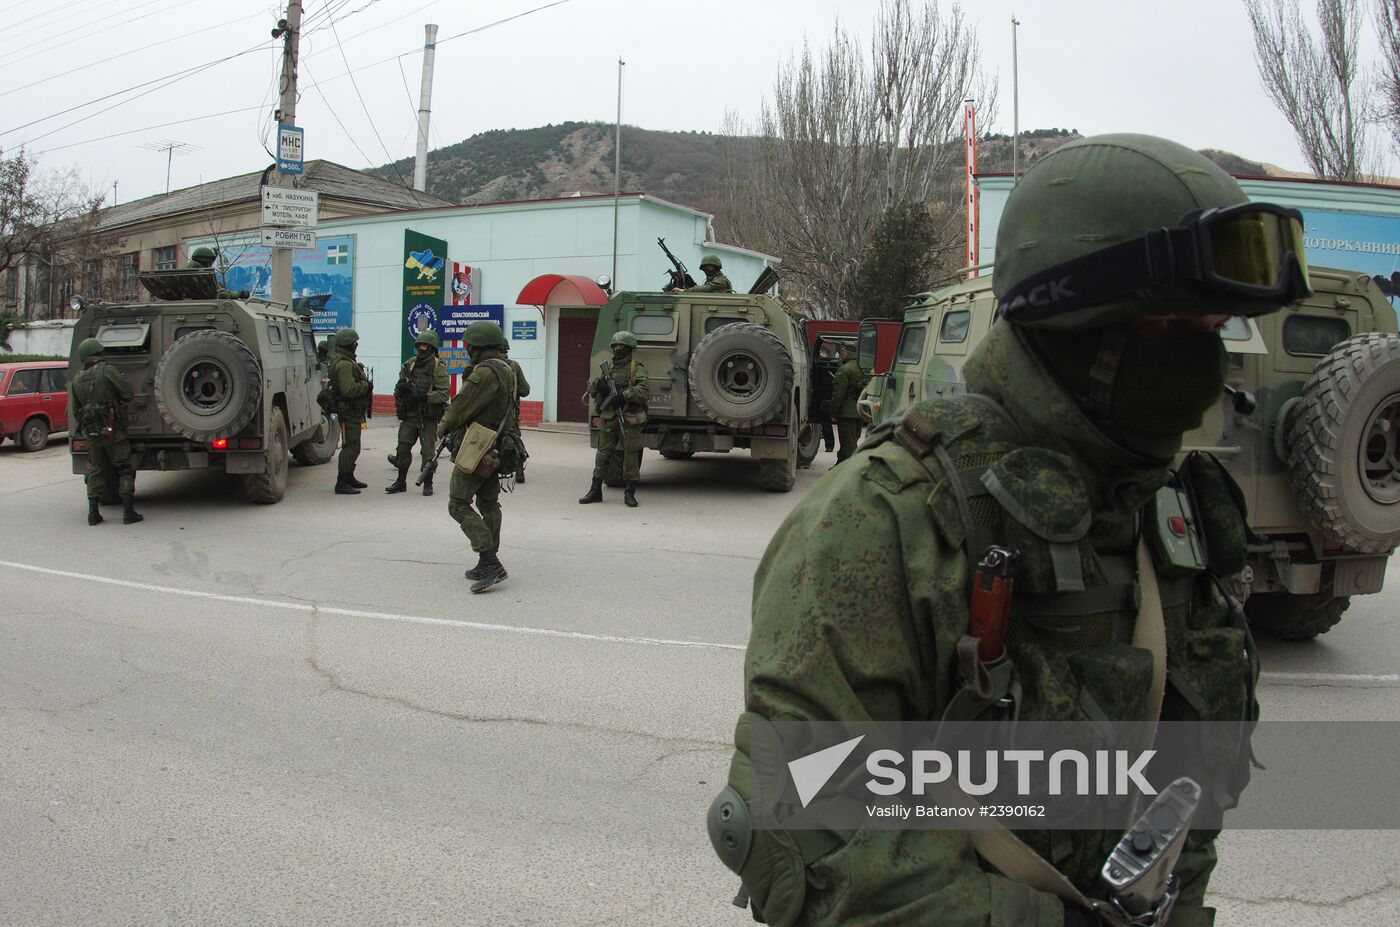 Situation in Sevastopol